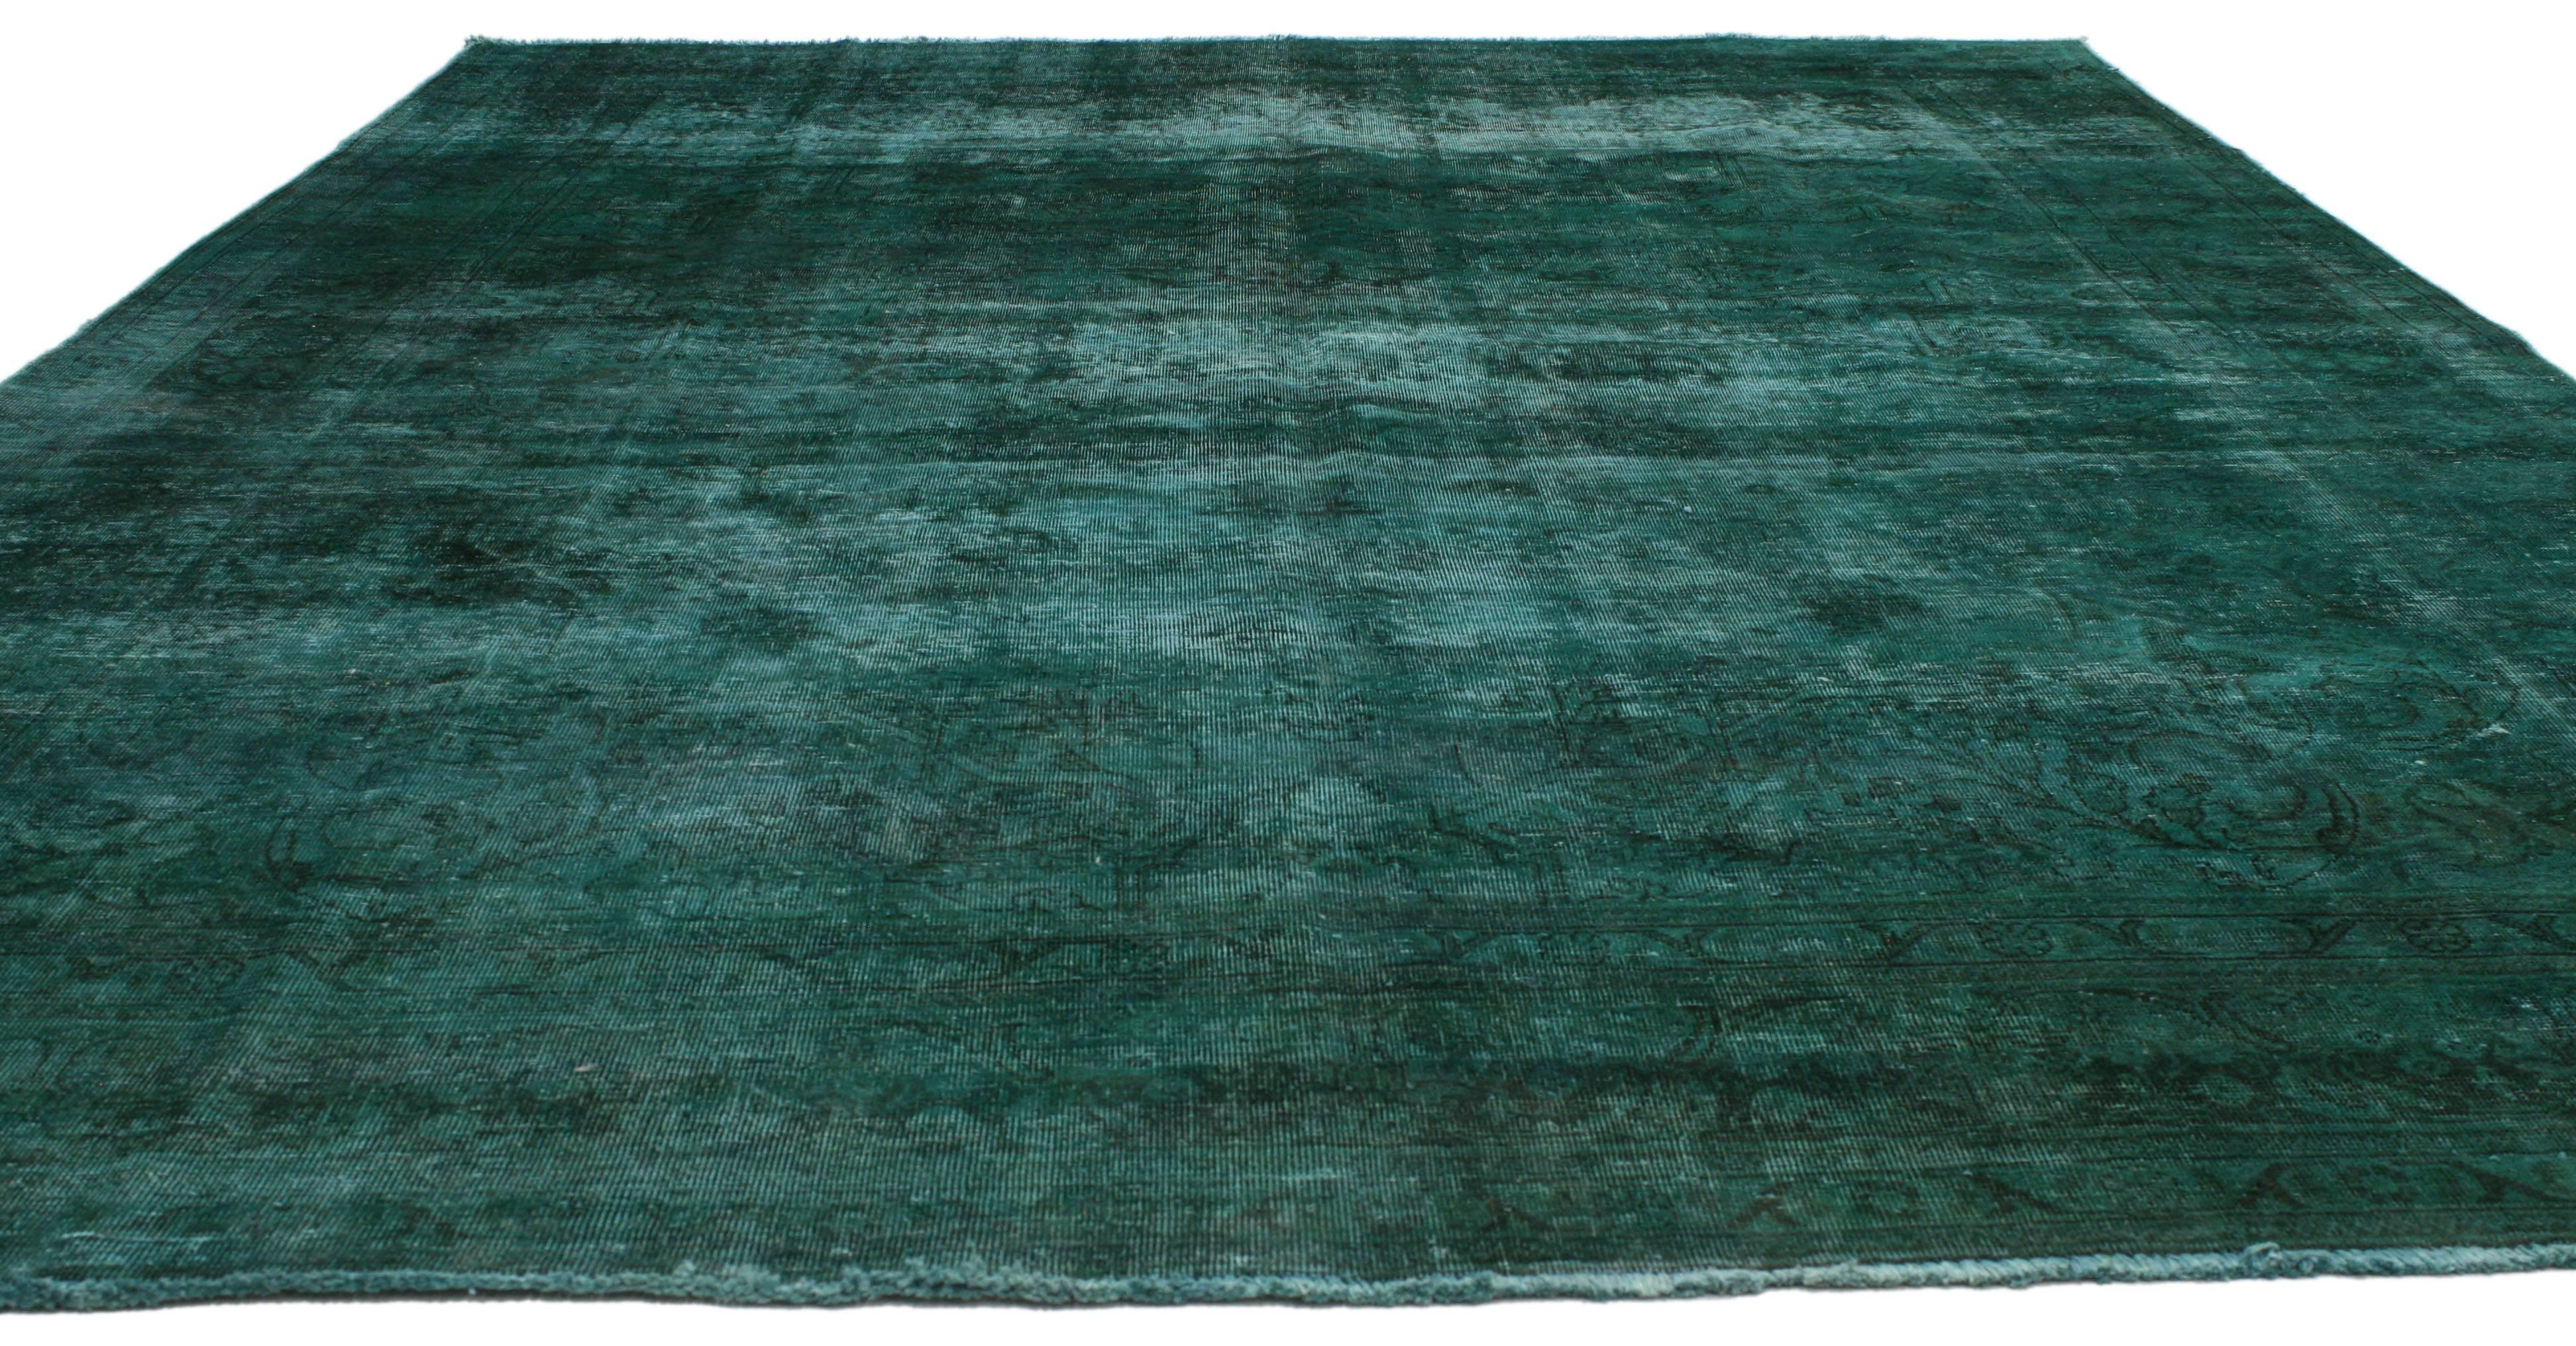 distressed modern rug